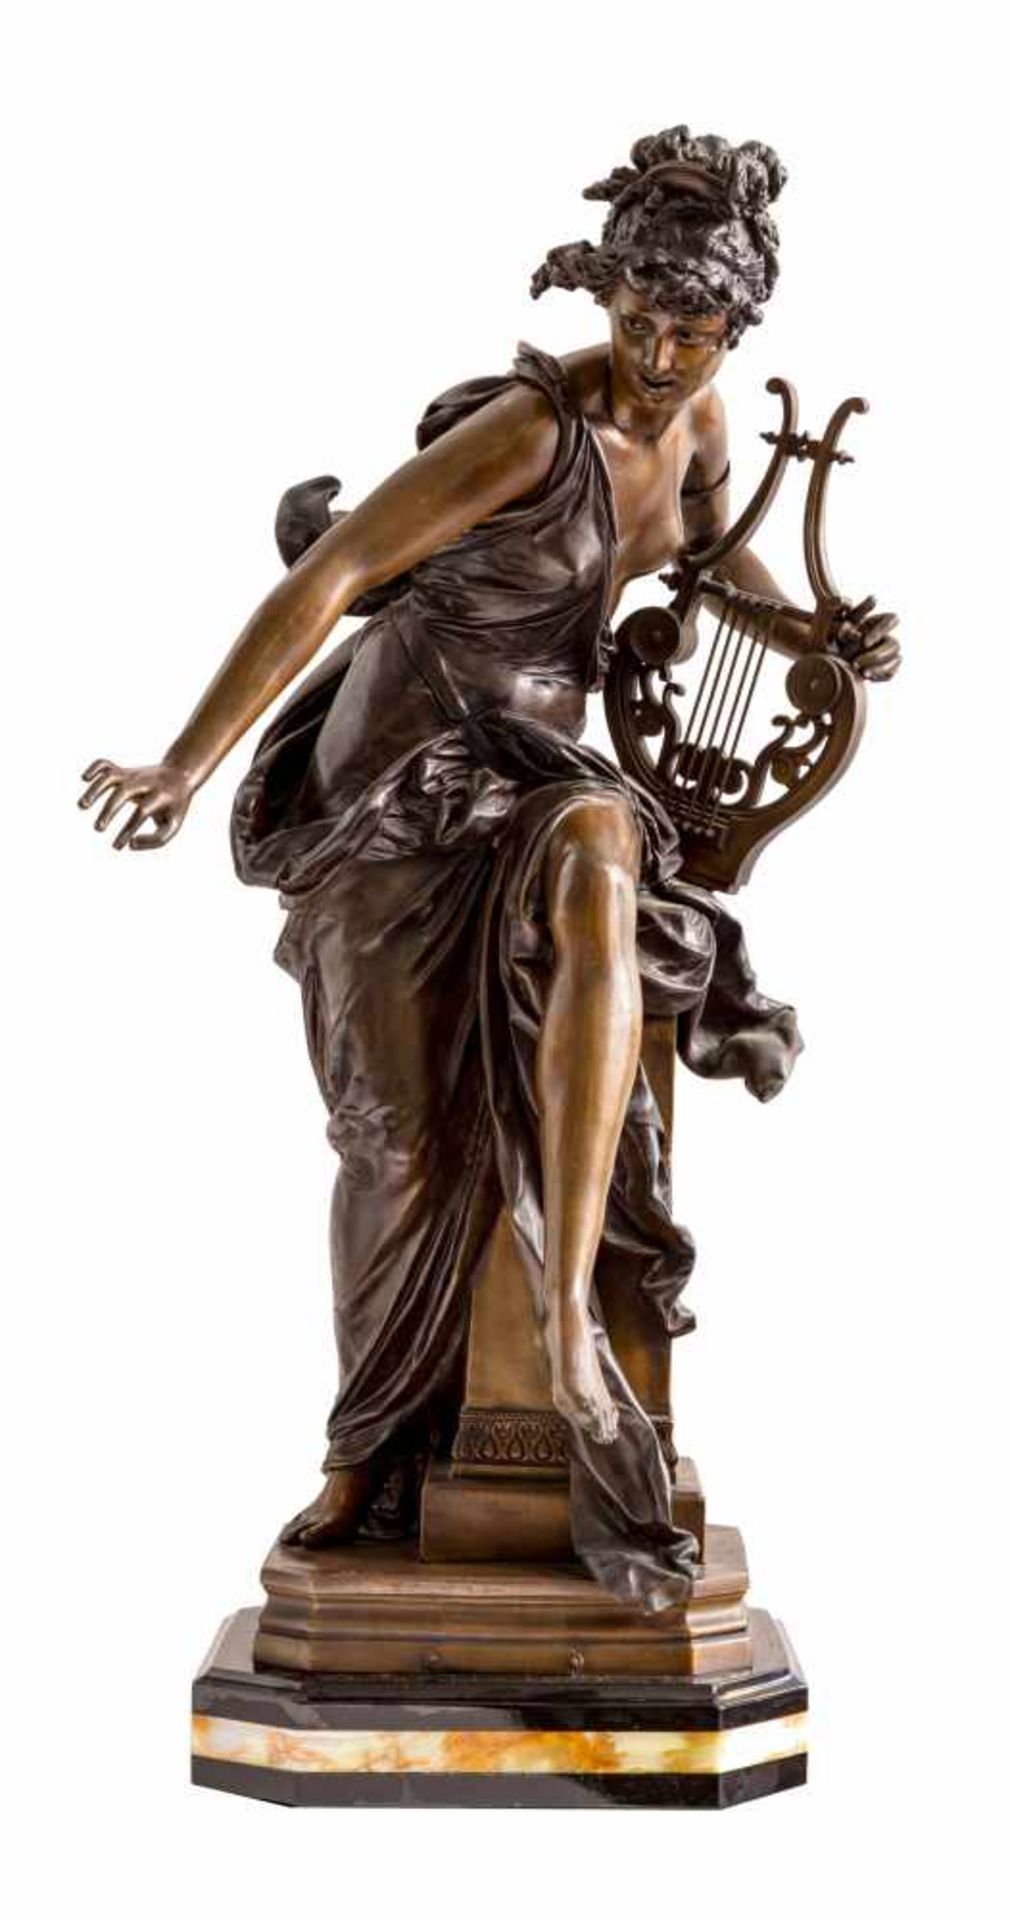 ALBERT CARRIER-BELLEUSE (1824-1887)HarmonieSculpture en bronze à patine brun et médaille, s